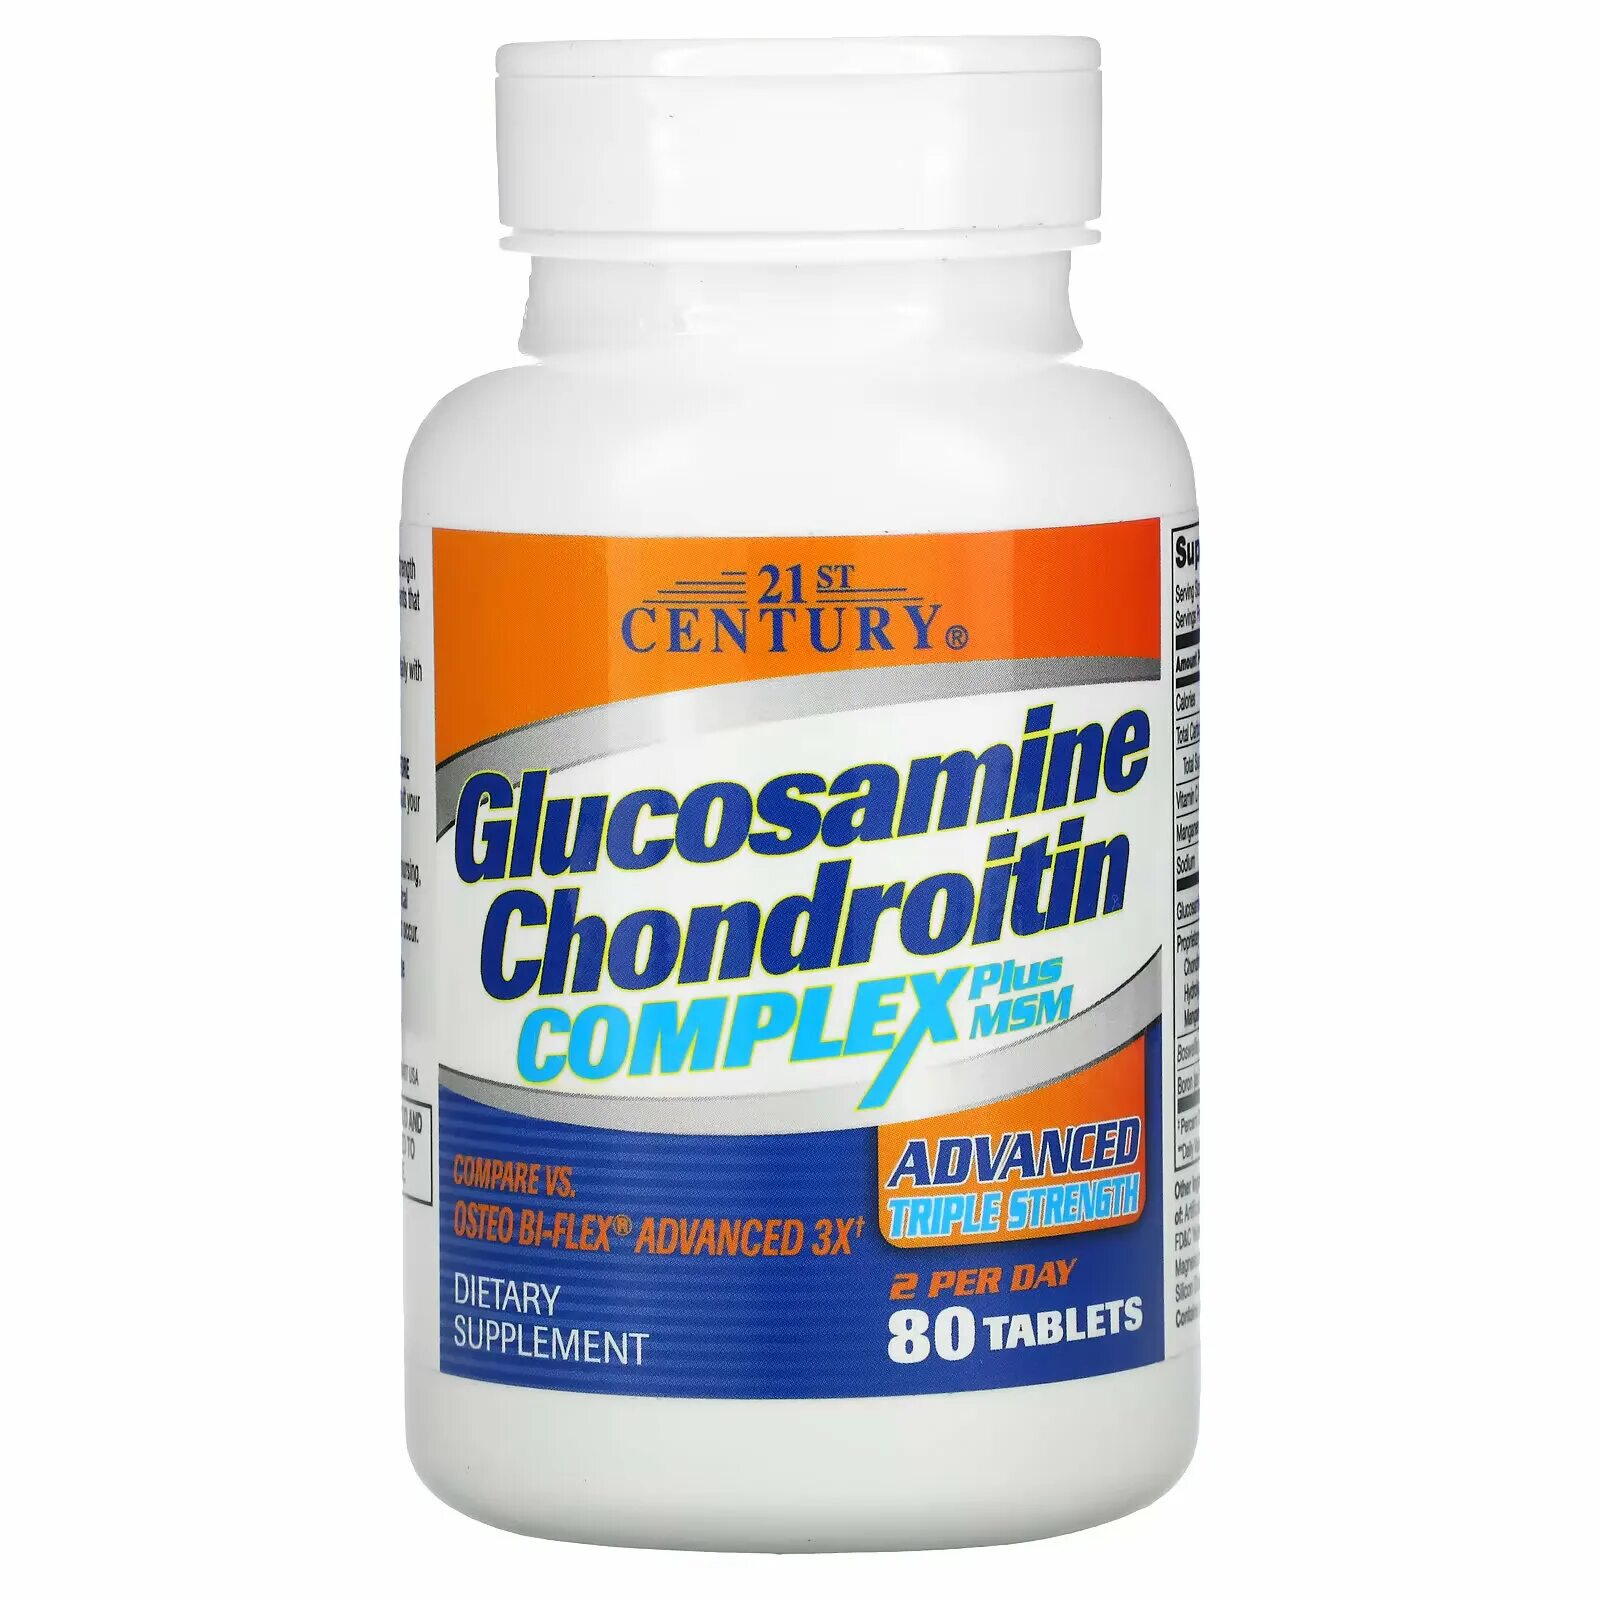 Vitamins хондроитин глюкозамин. 21st Century Glucosamine Chondroitin Complex Plus MSM. 21 Century глюкозамин хондроитин. Glucosamine Chondroitin Complex Plus MSM. Century Glucosamine Chondroitin Advanced.